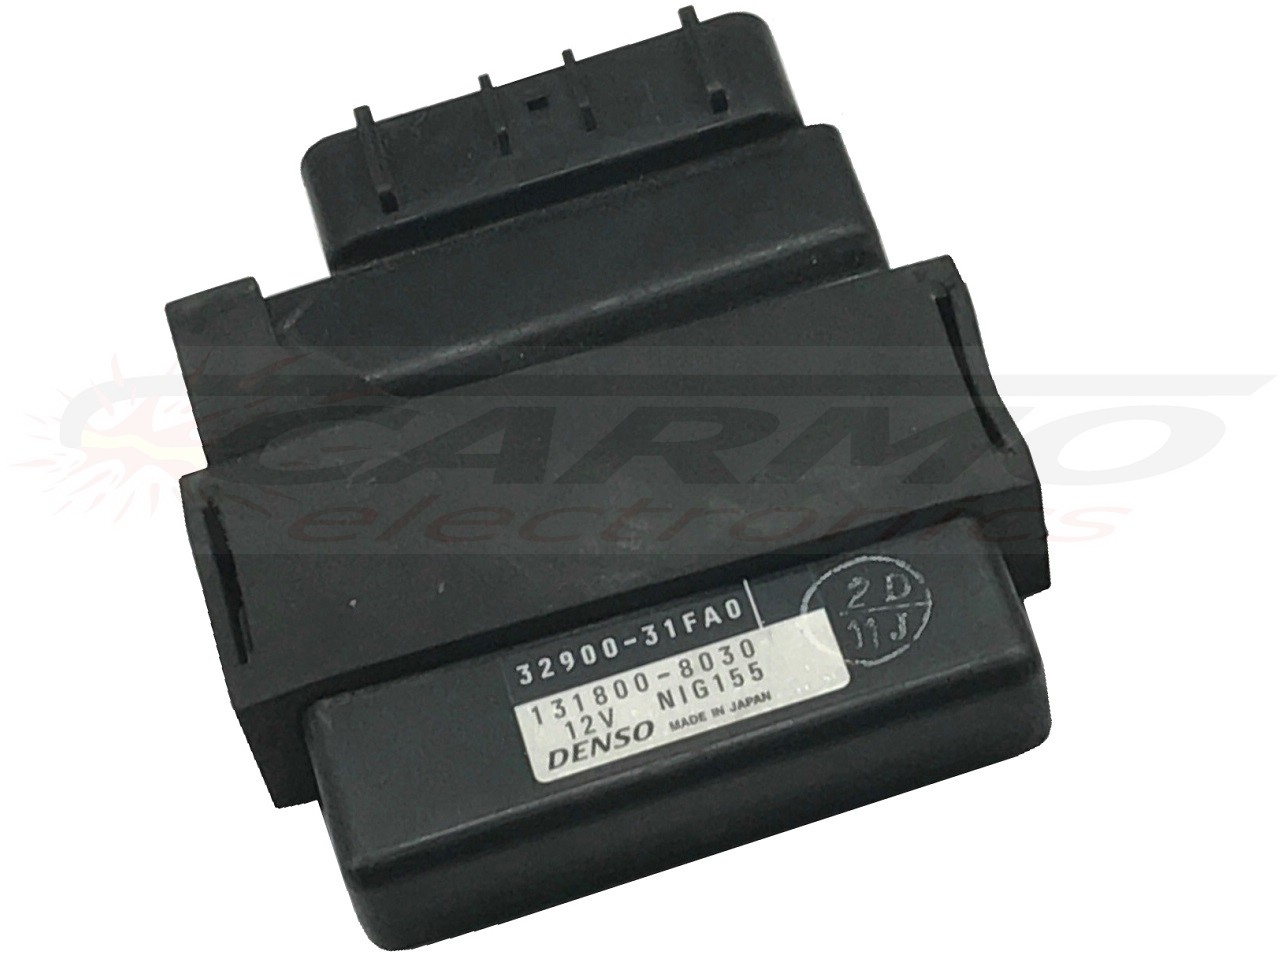 GSF600S igniter ignition module CDI TCI Box (832900-31FAO, 131800-8030)